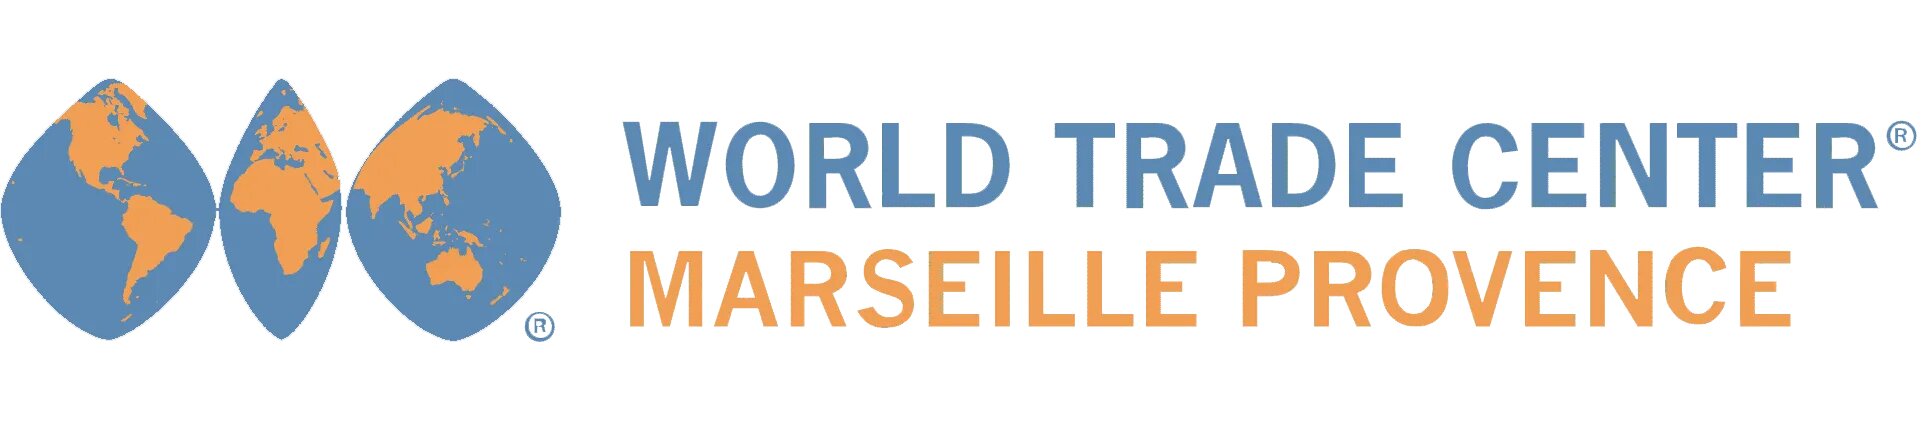 logo world trade center marseille